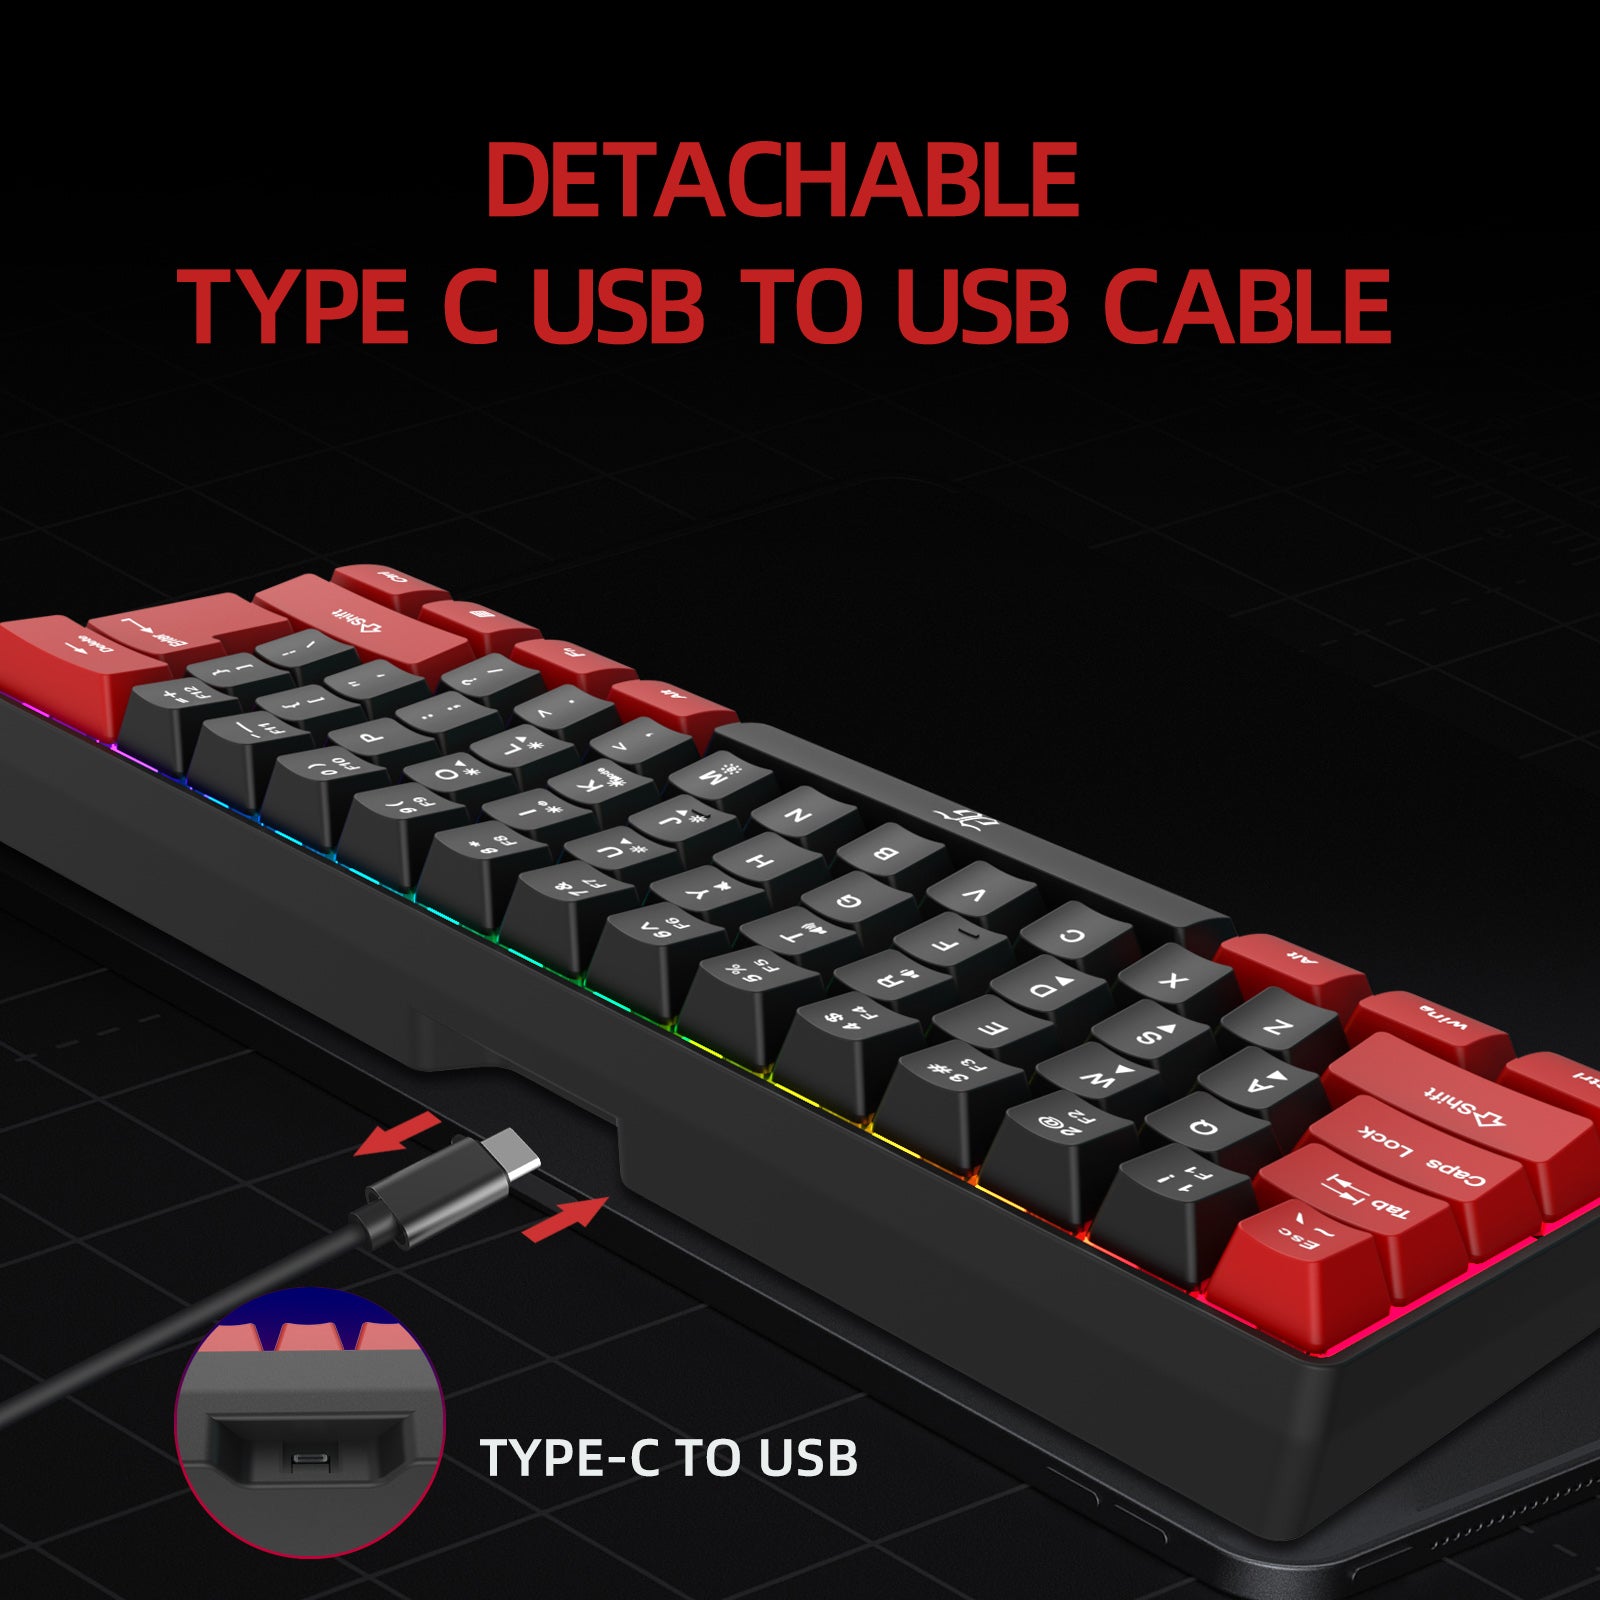 Snpurdiri 60% Membrane Wired Gaming Keyboard, Red-Black